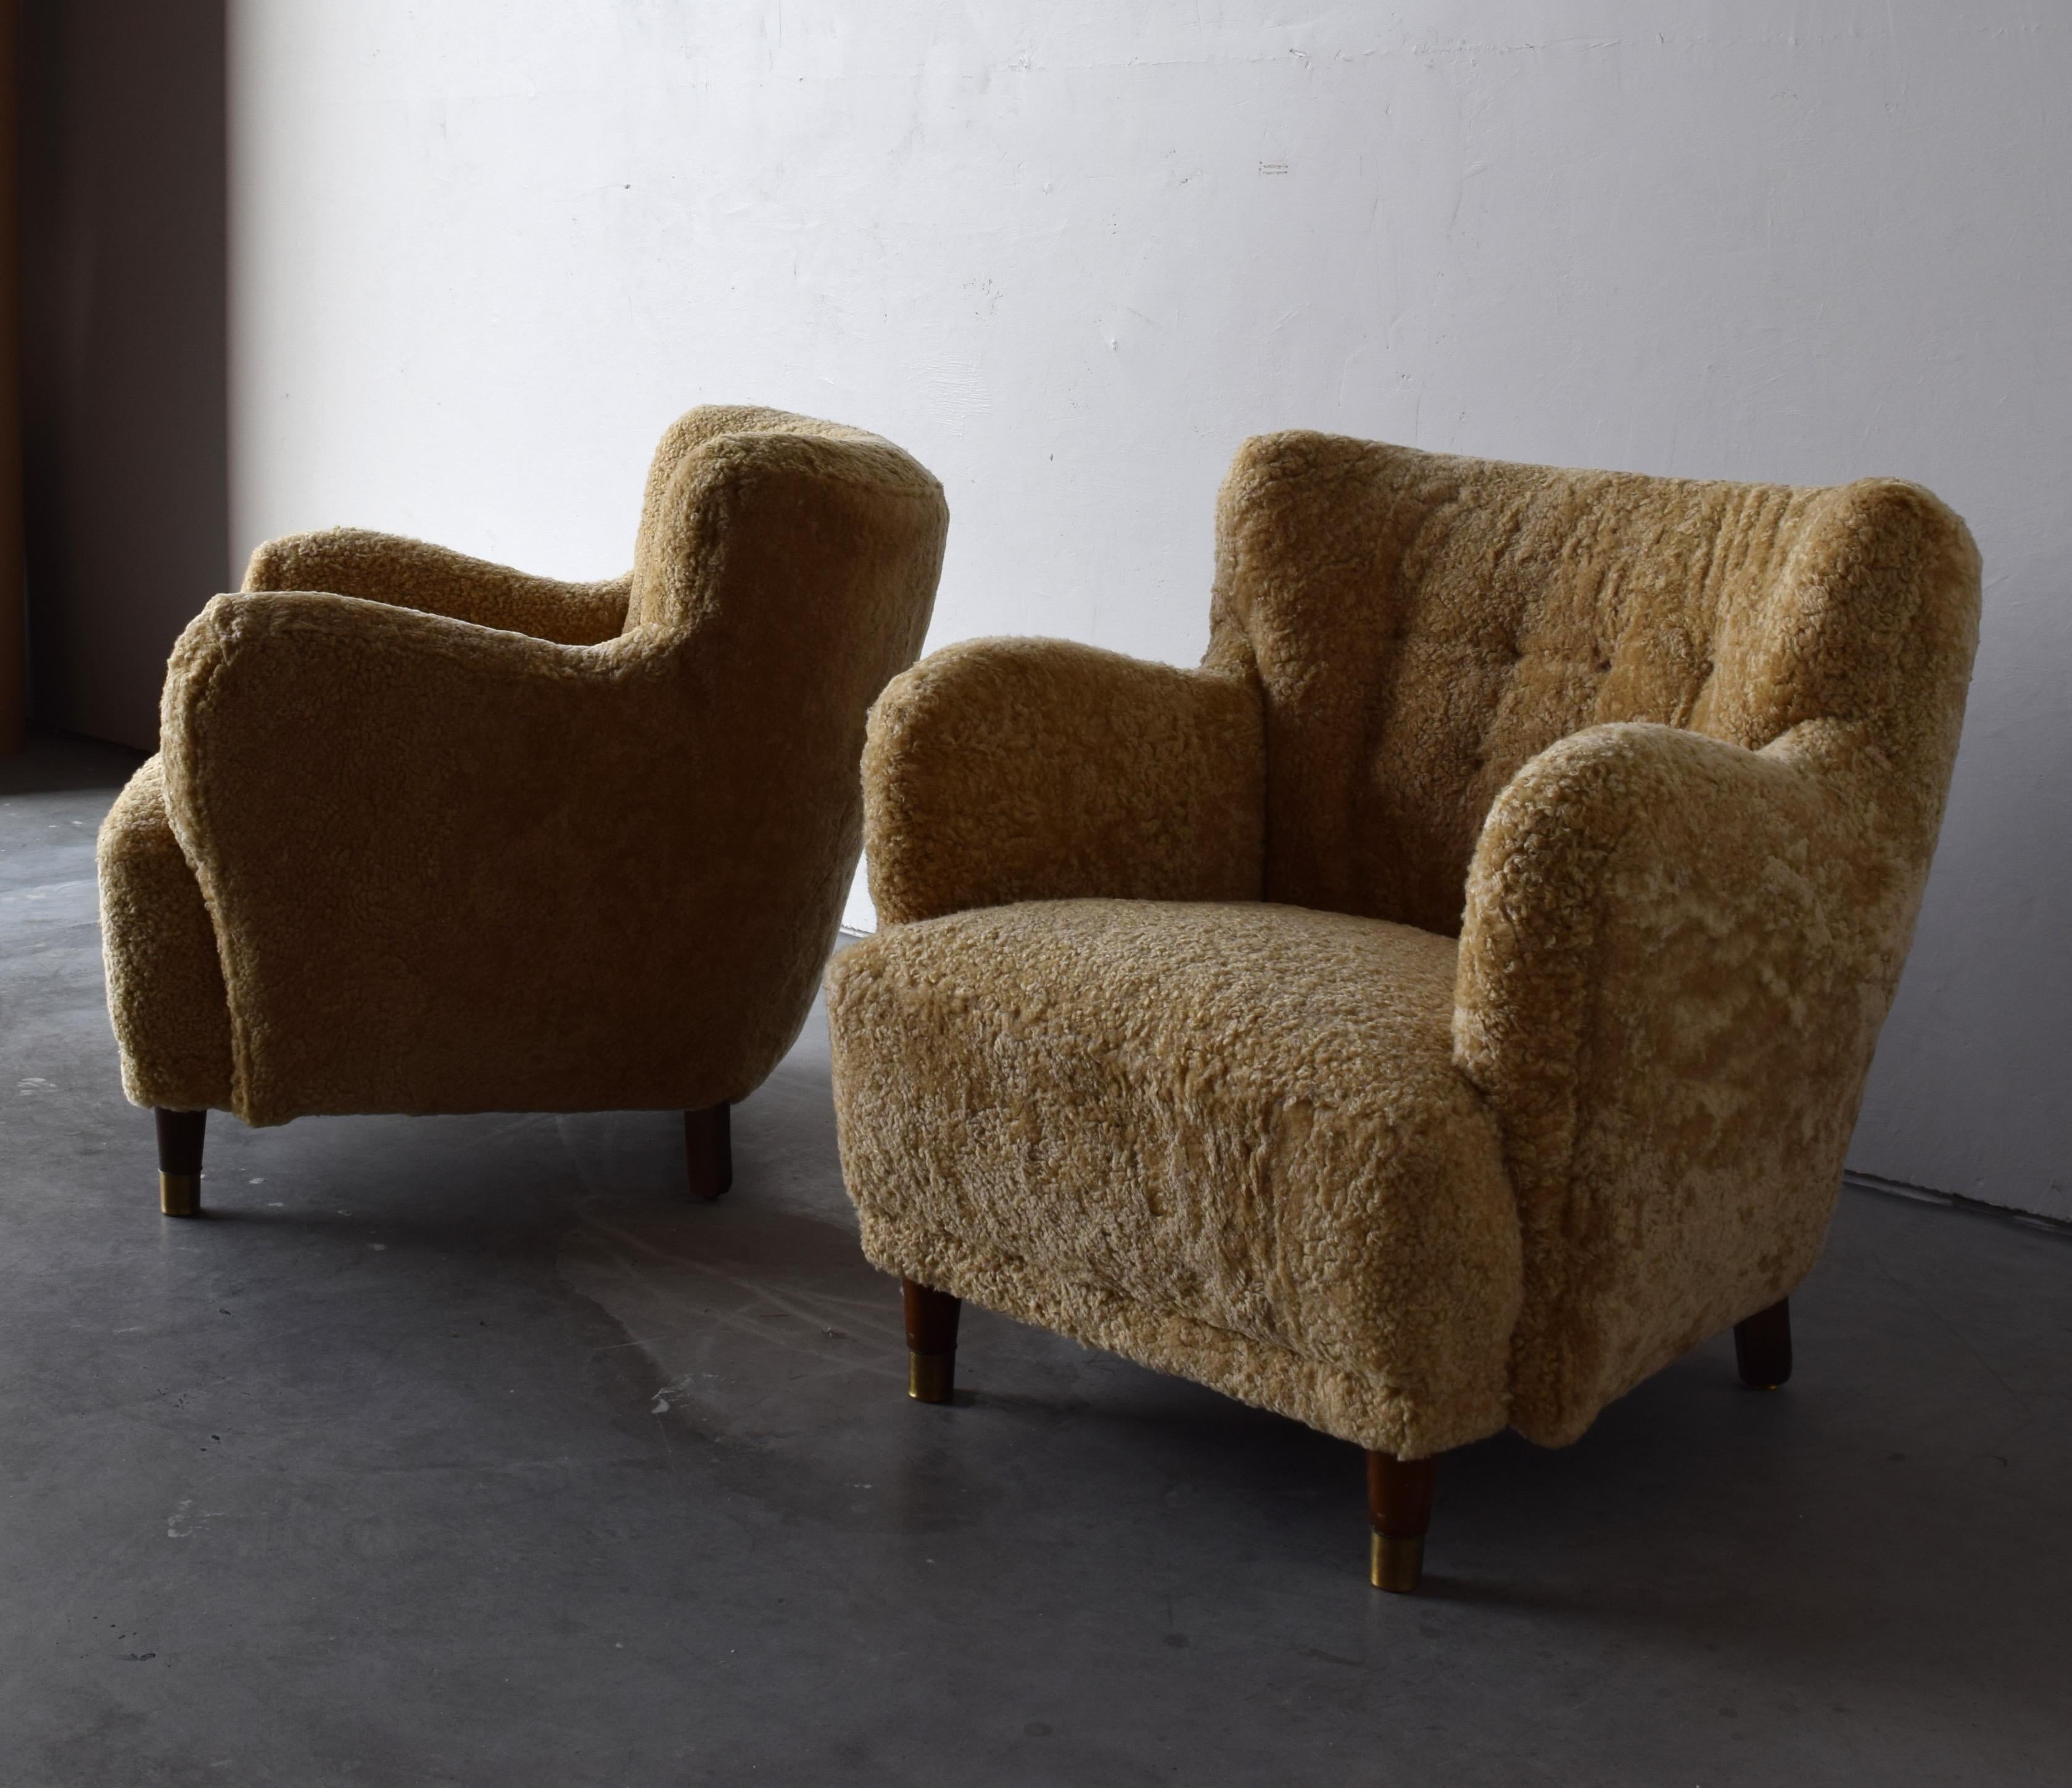 Mid-20th Century Danish Designer, Organic Lounge Chairs, Sheepskin, Wood, Brass, Denmark, 1940s